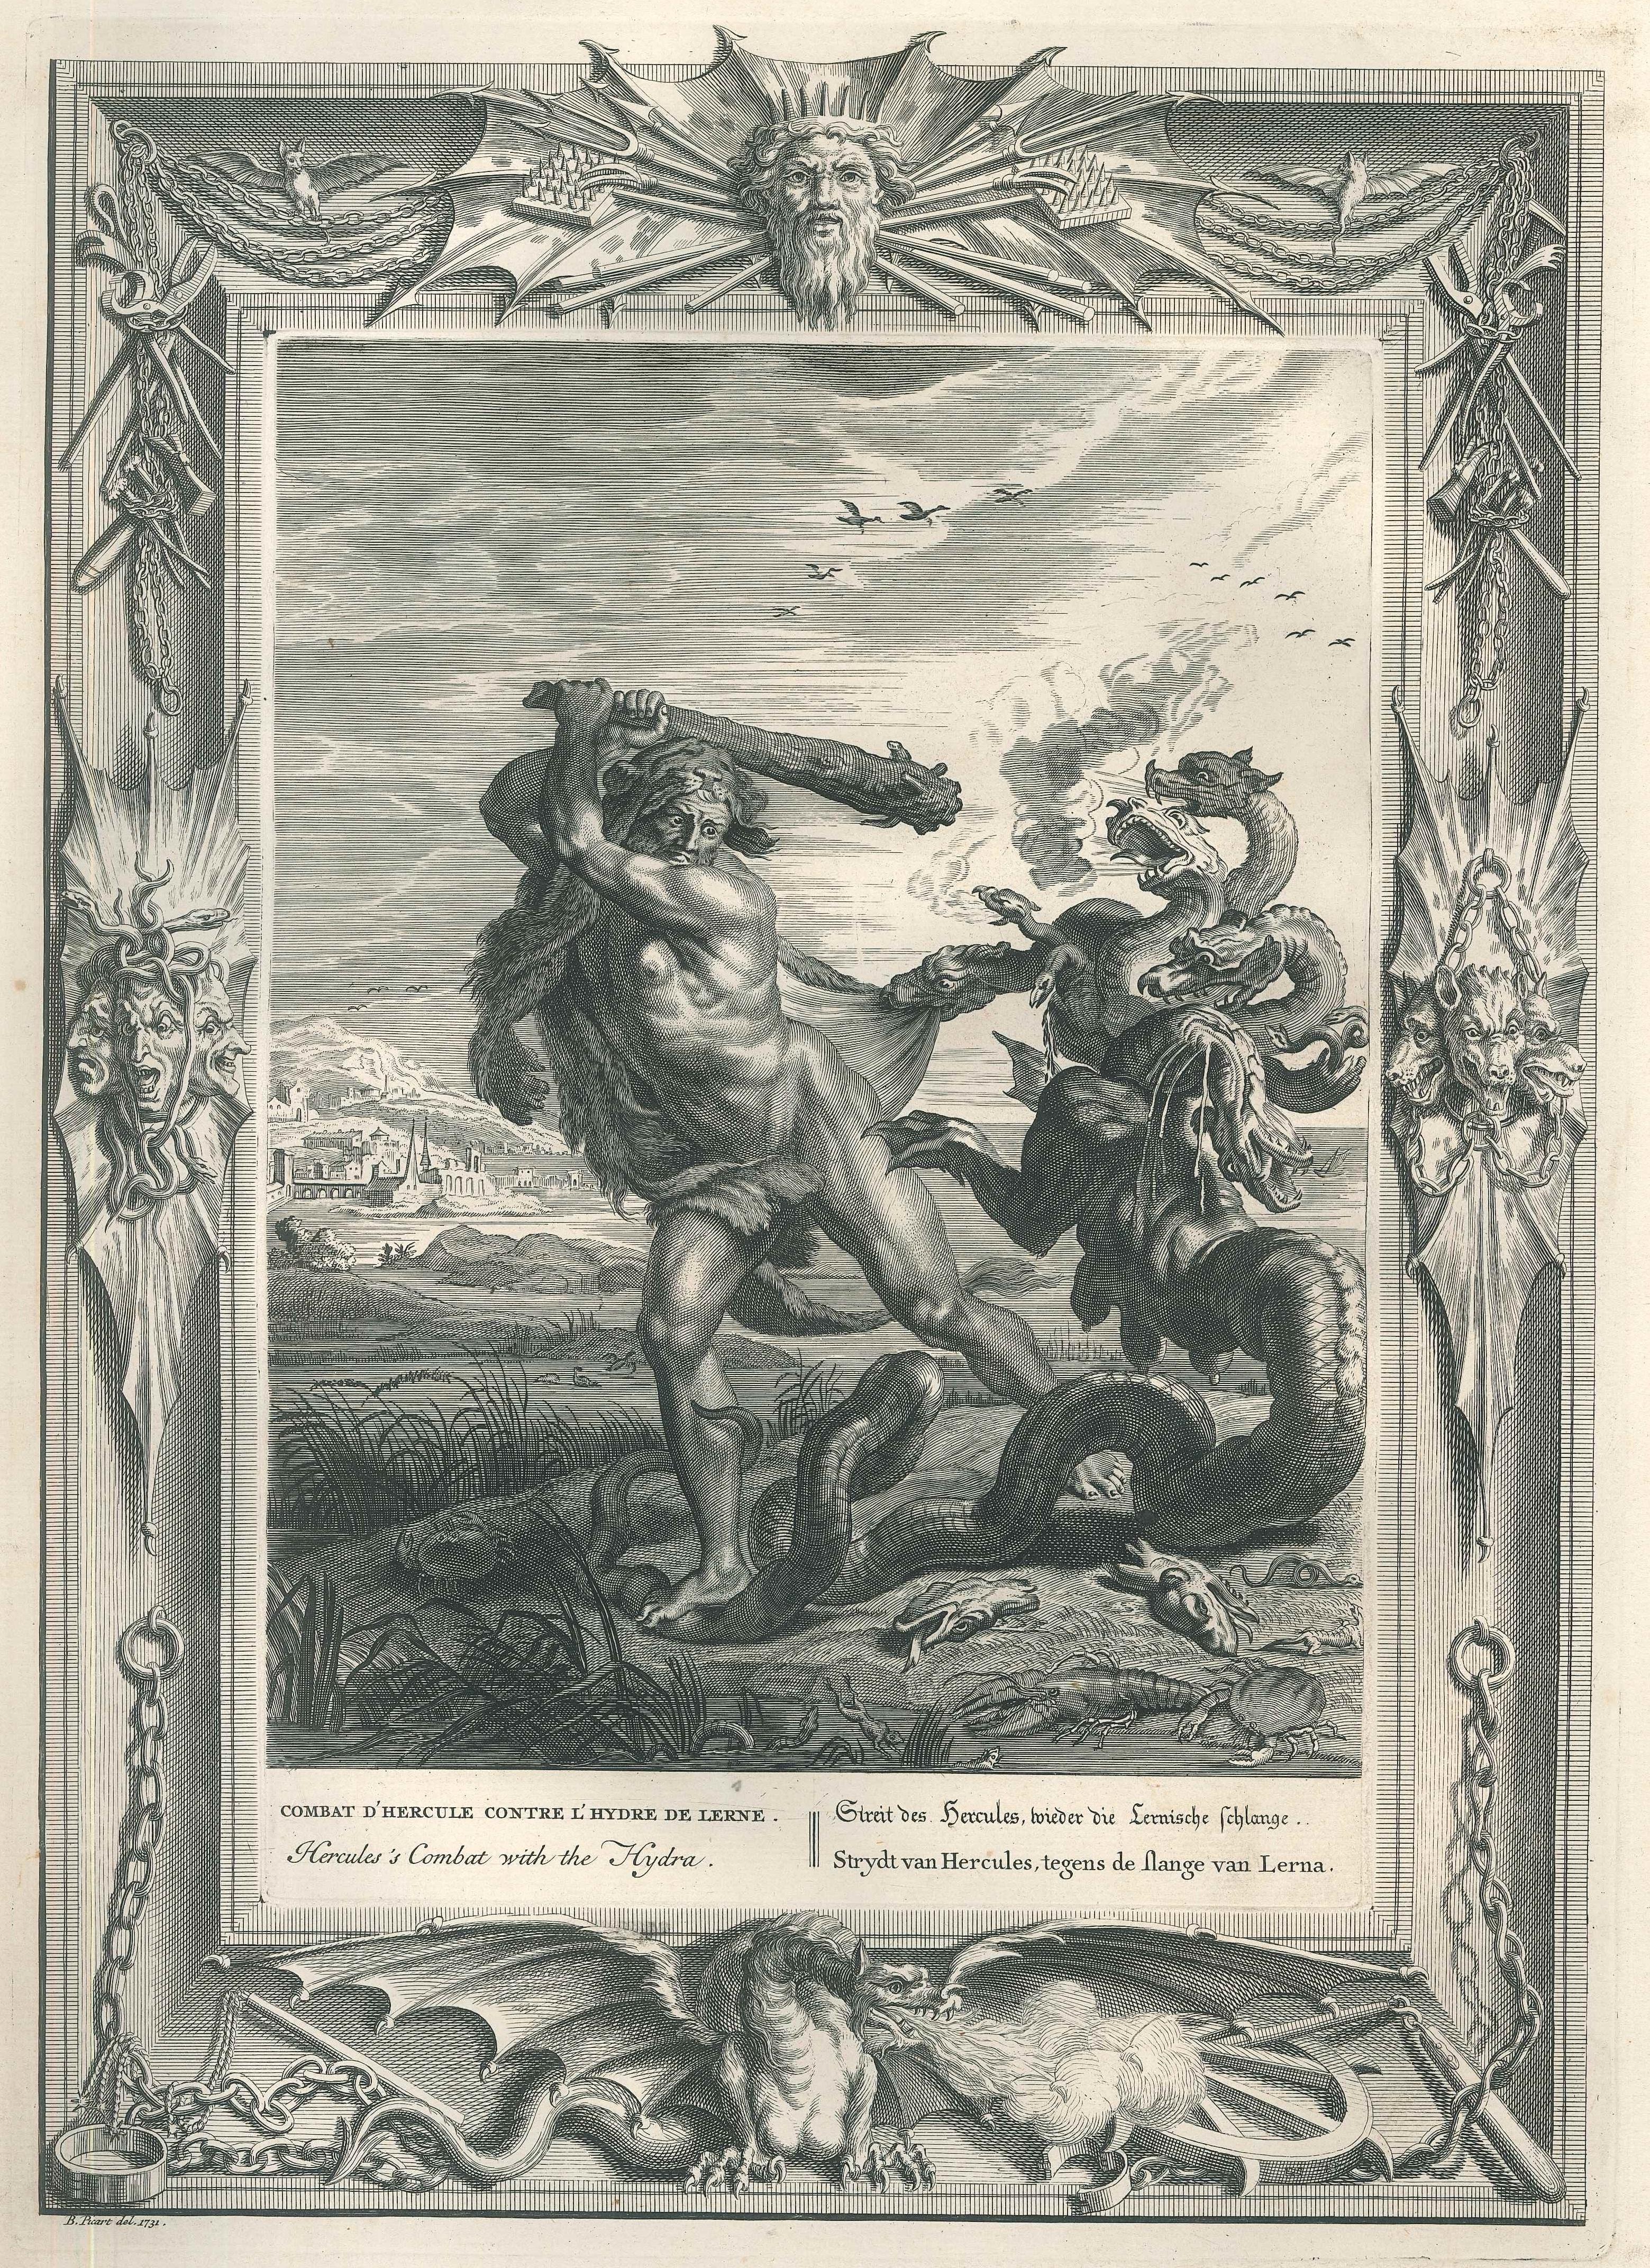 Bernard Picart Figurative Print - Combat d'Hercule, from "Temple des Muses" - Original Etching by B. Picart - 1742